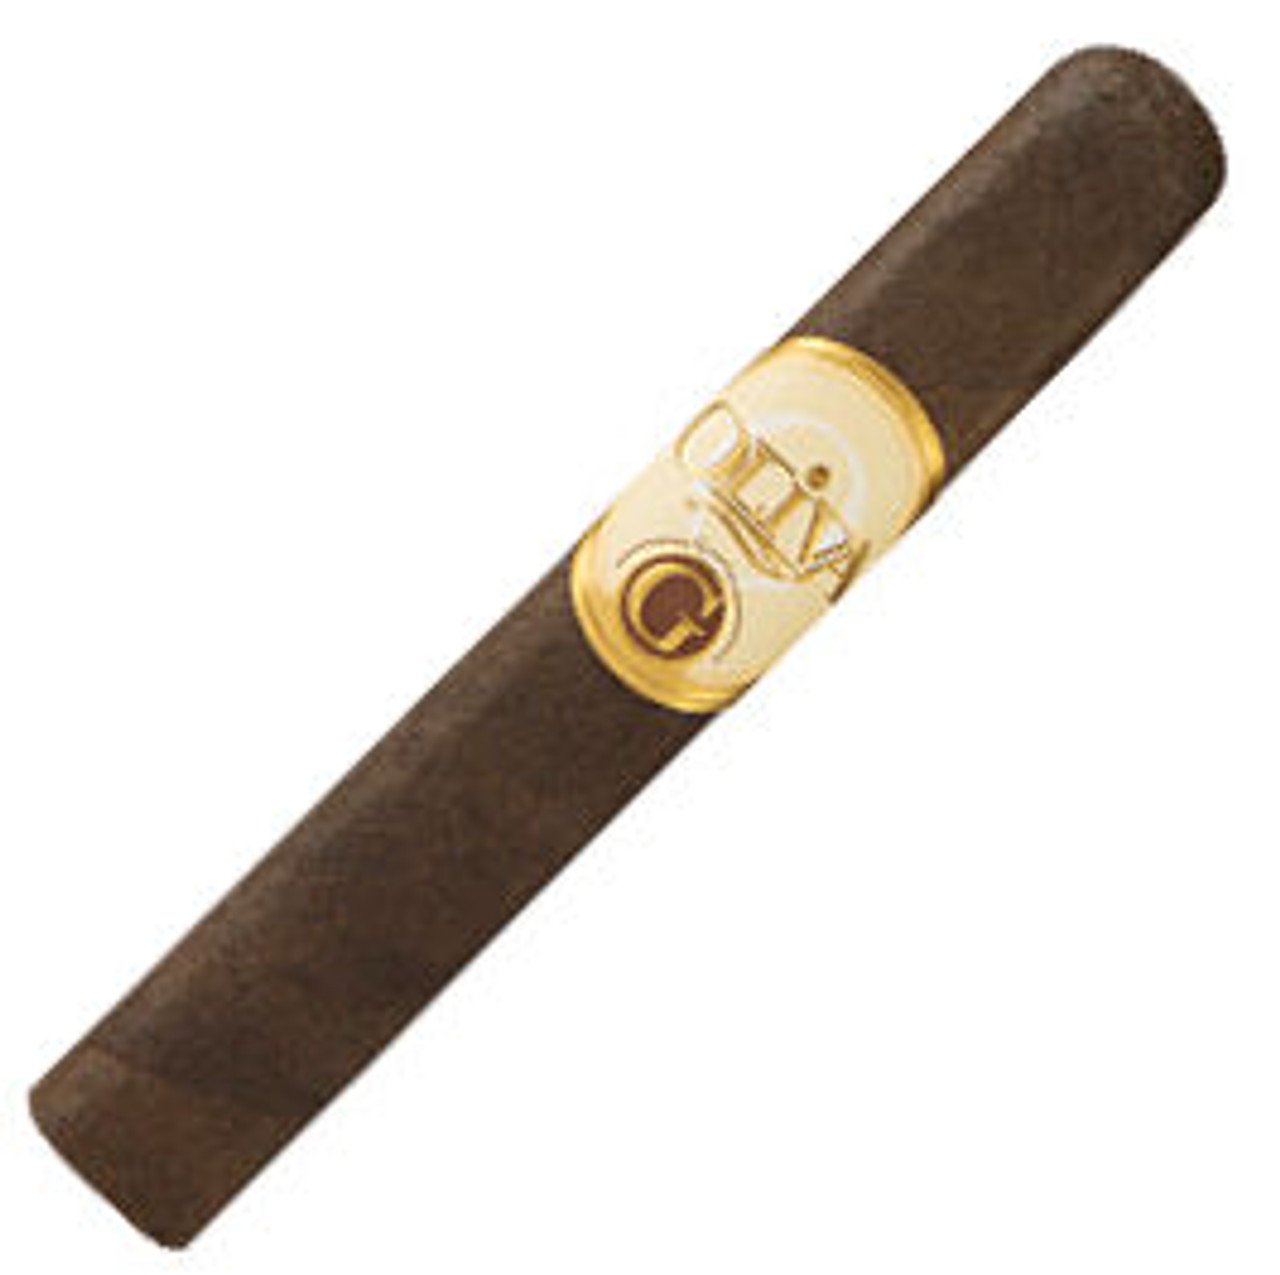 Oliva Serie G Robusto Maduro Cigars - 4.5 x 50 (Box of 24)